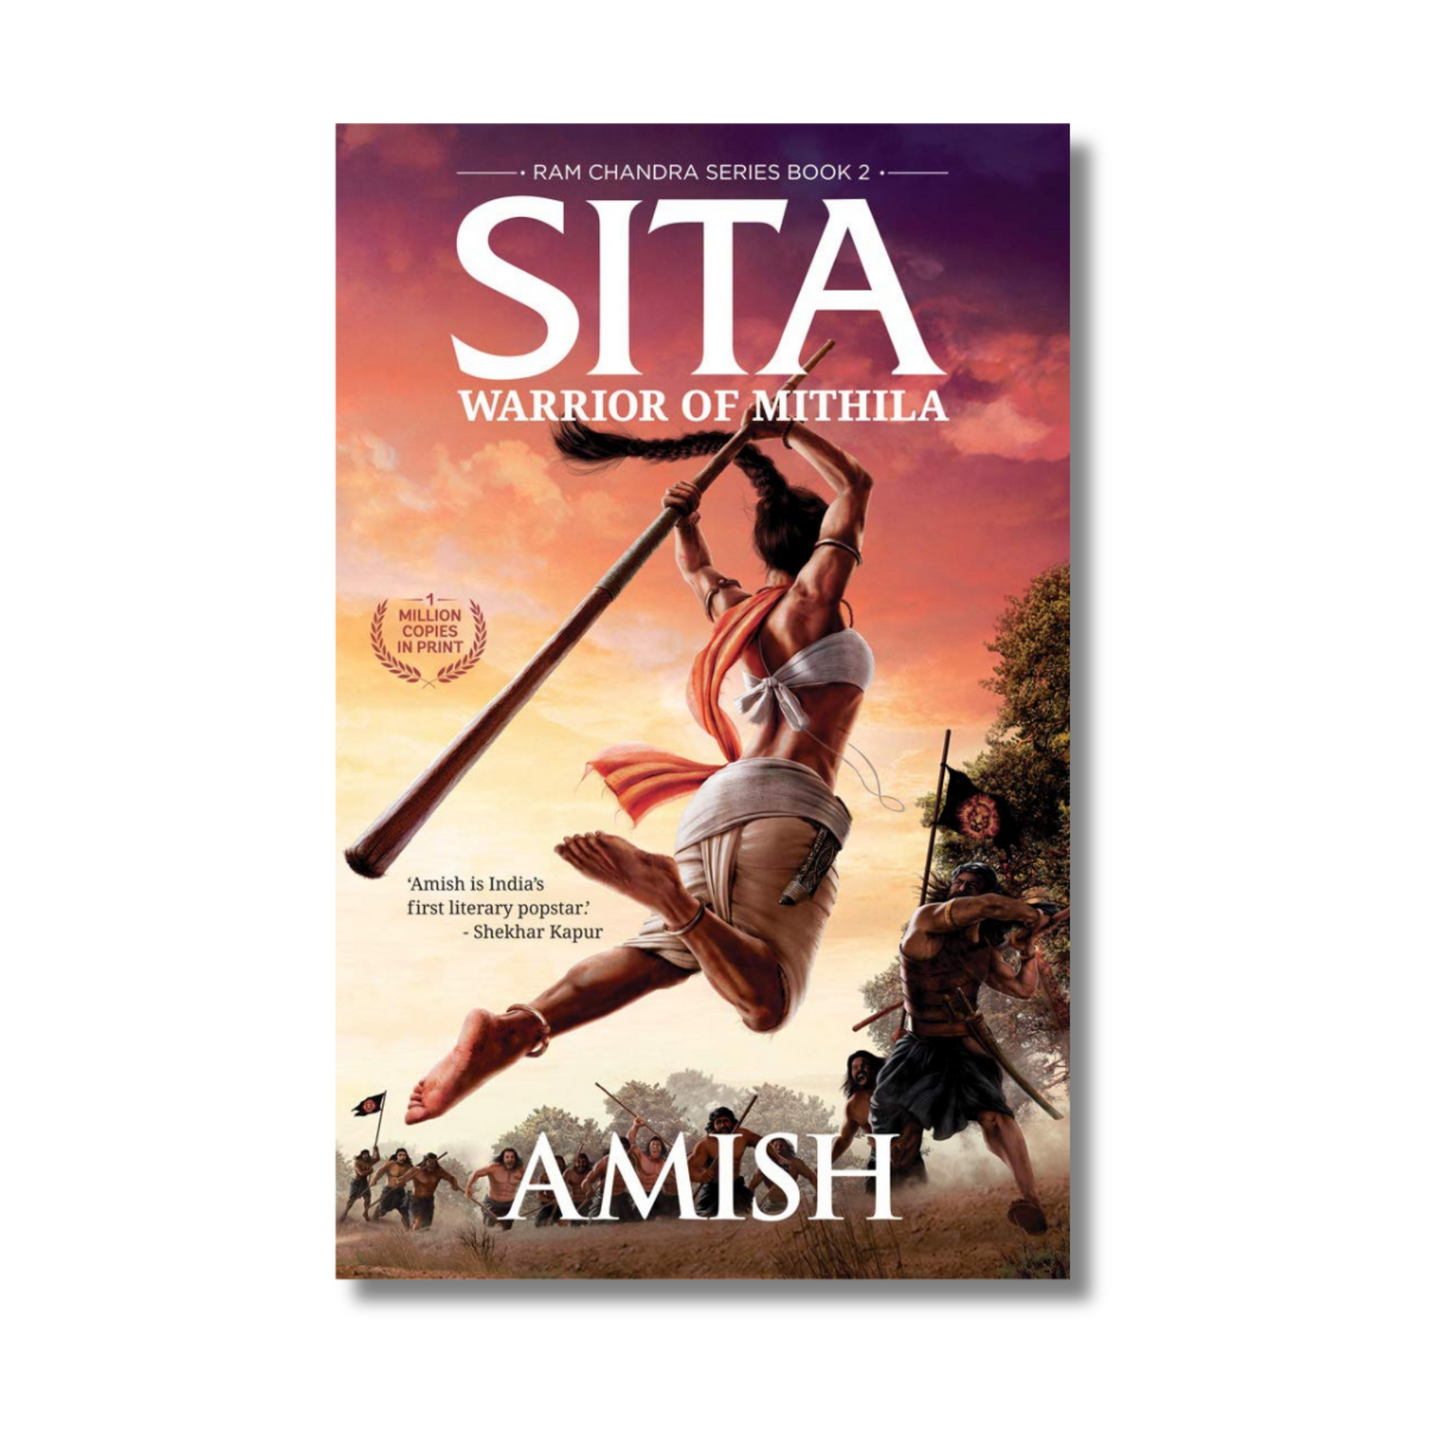 Sita: Warrior of Mithila (Ram Chandra Series - Book 2) By Amish (Paperback)